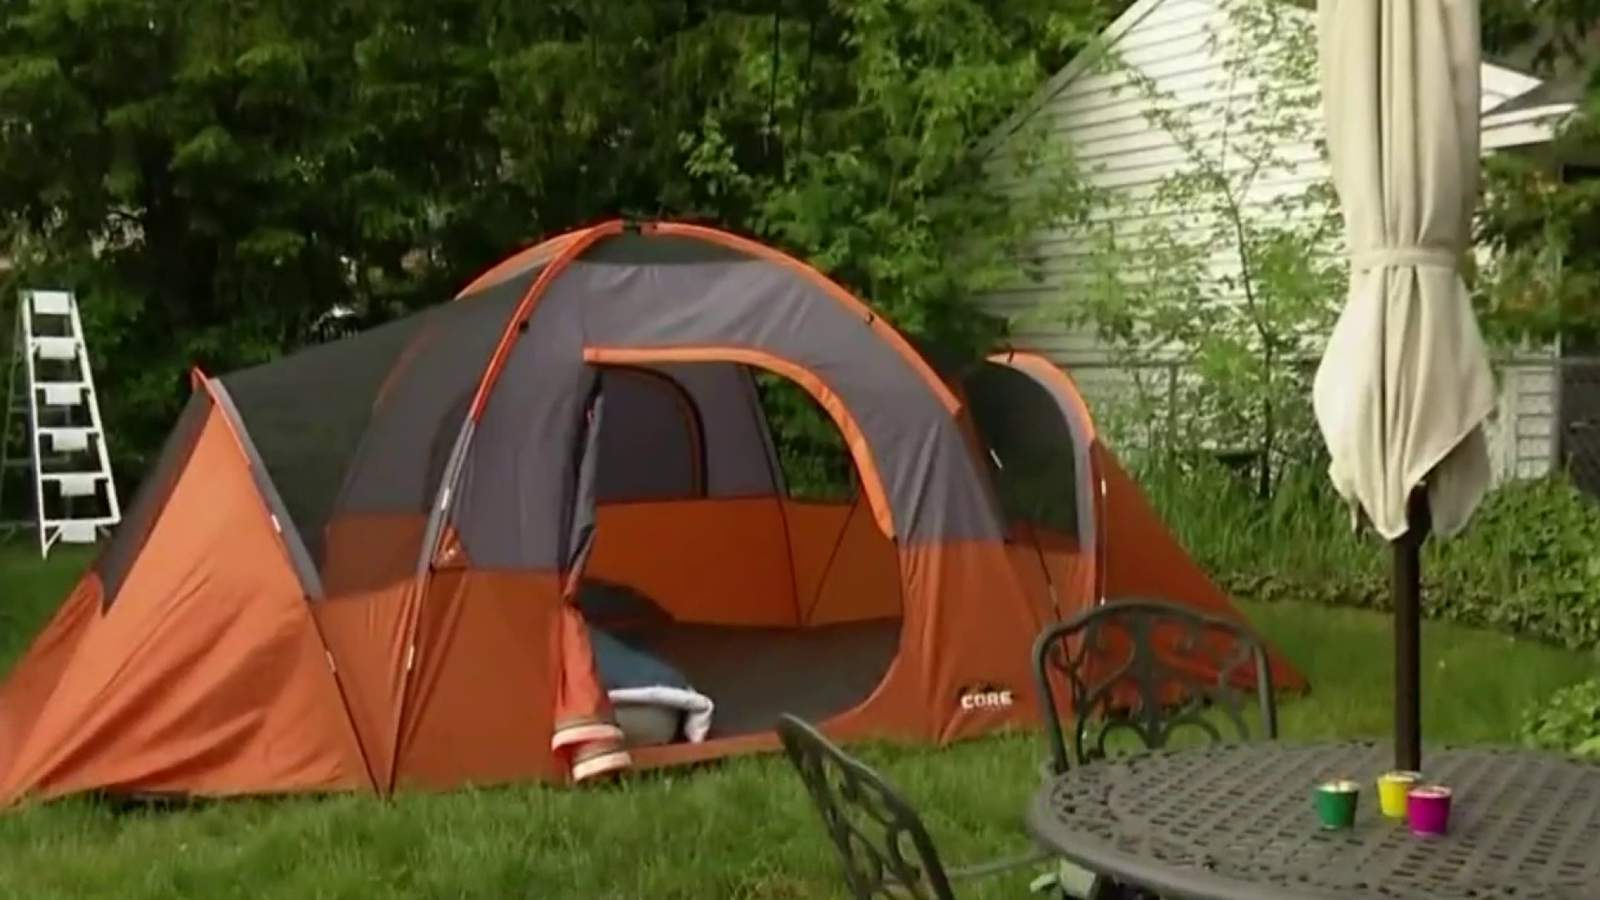 Turn your backyard into a fun campsite